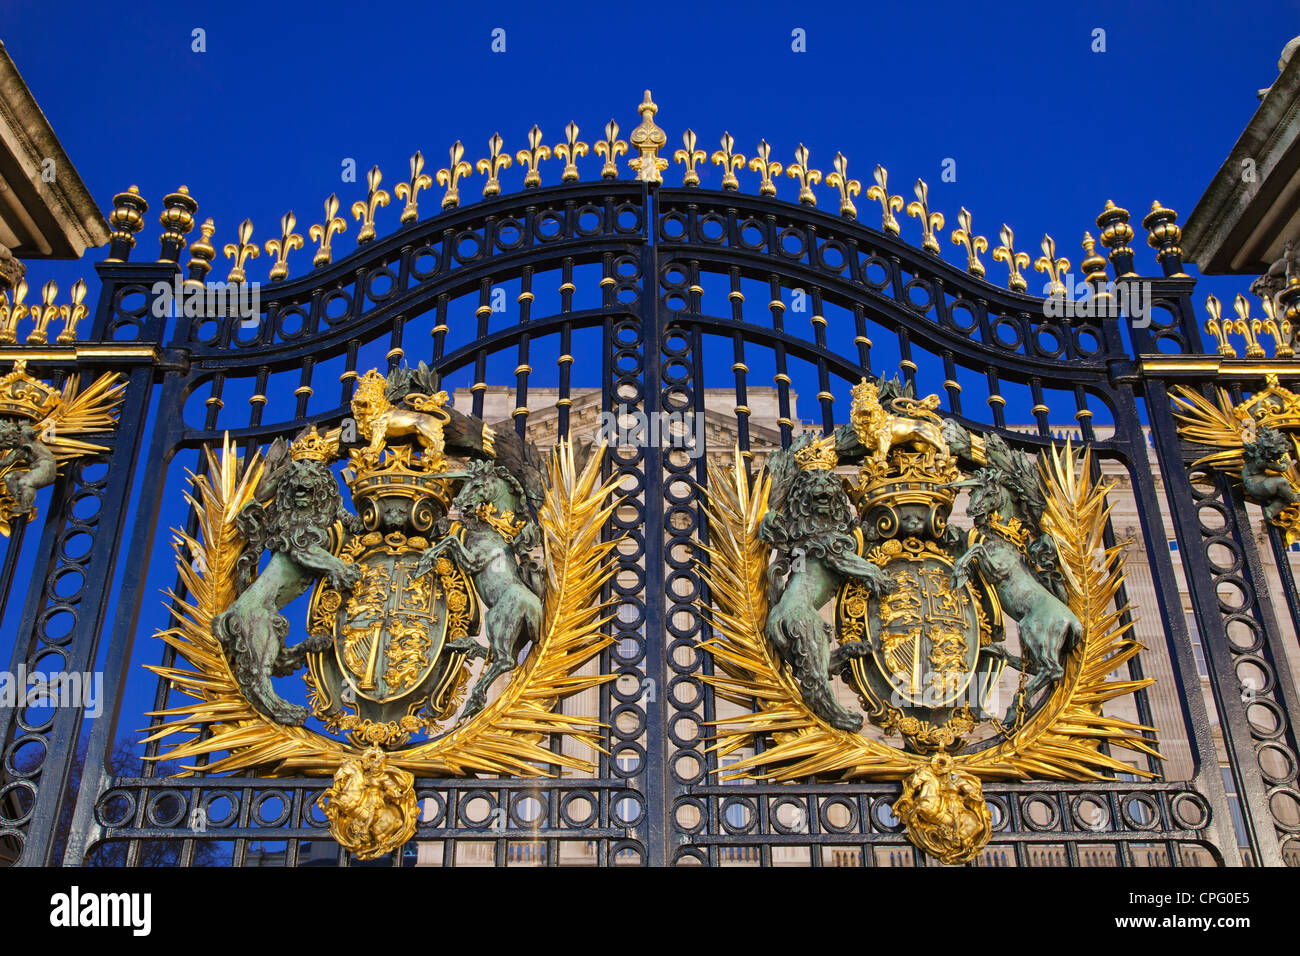 England, London, Buckingham Palace, Royal Coat of Arms on the Main Gate Stock Photo